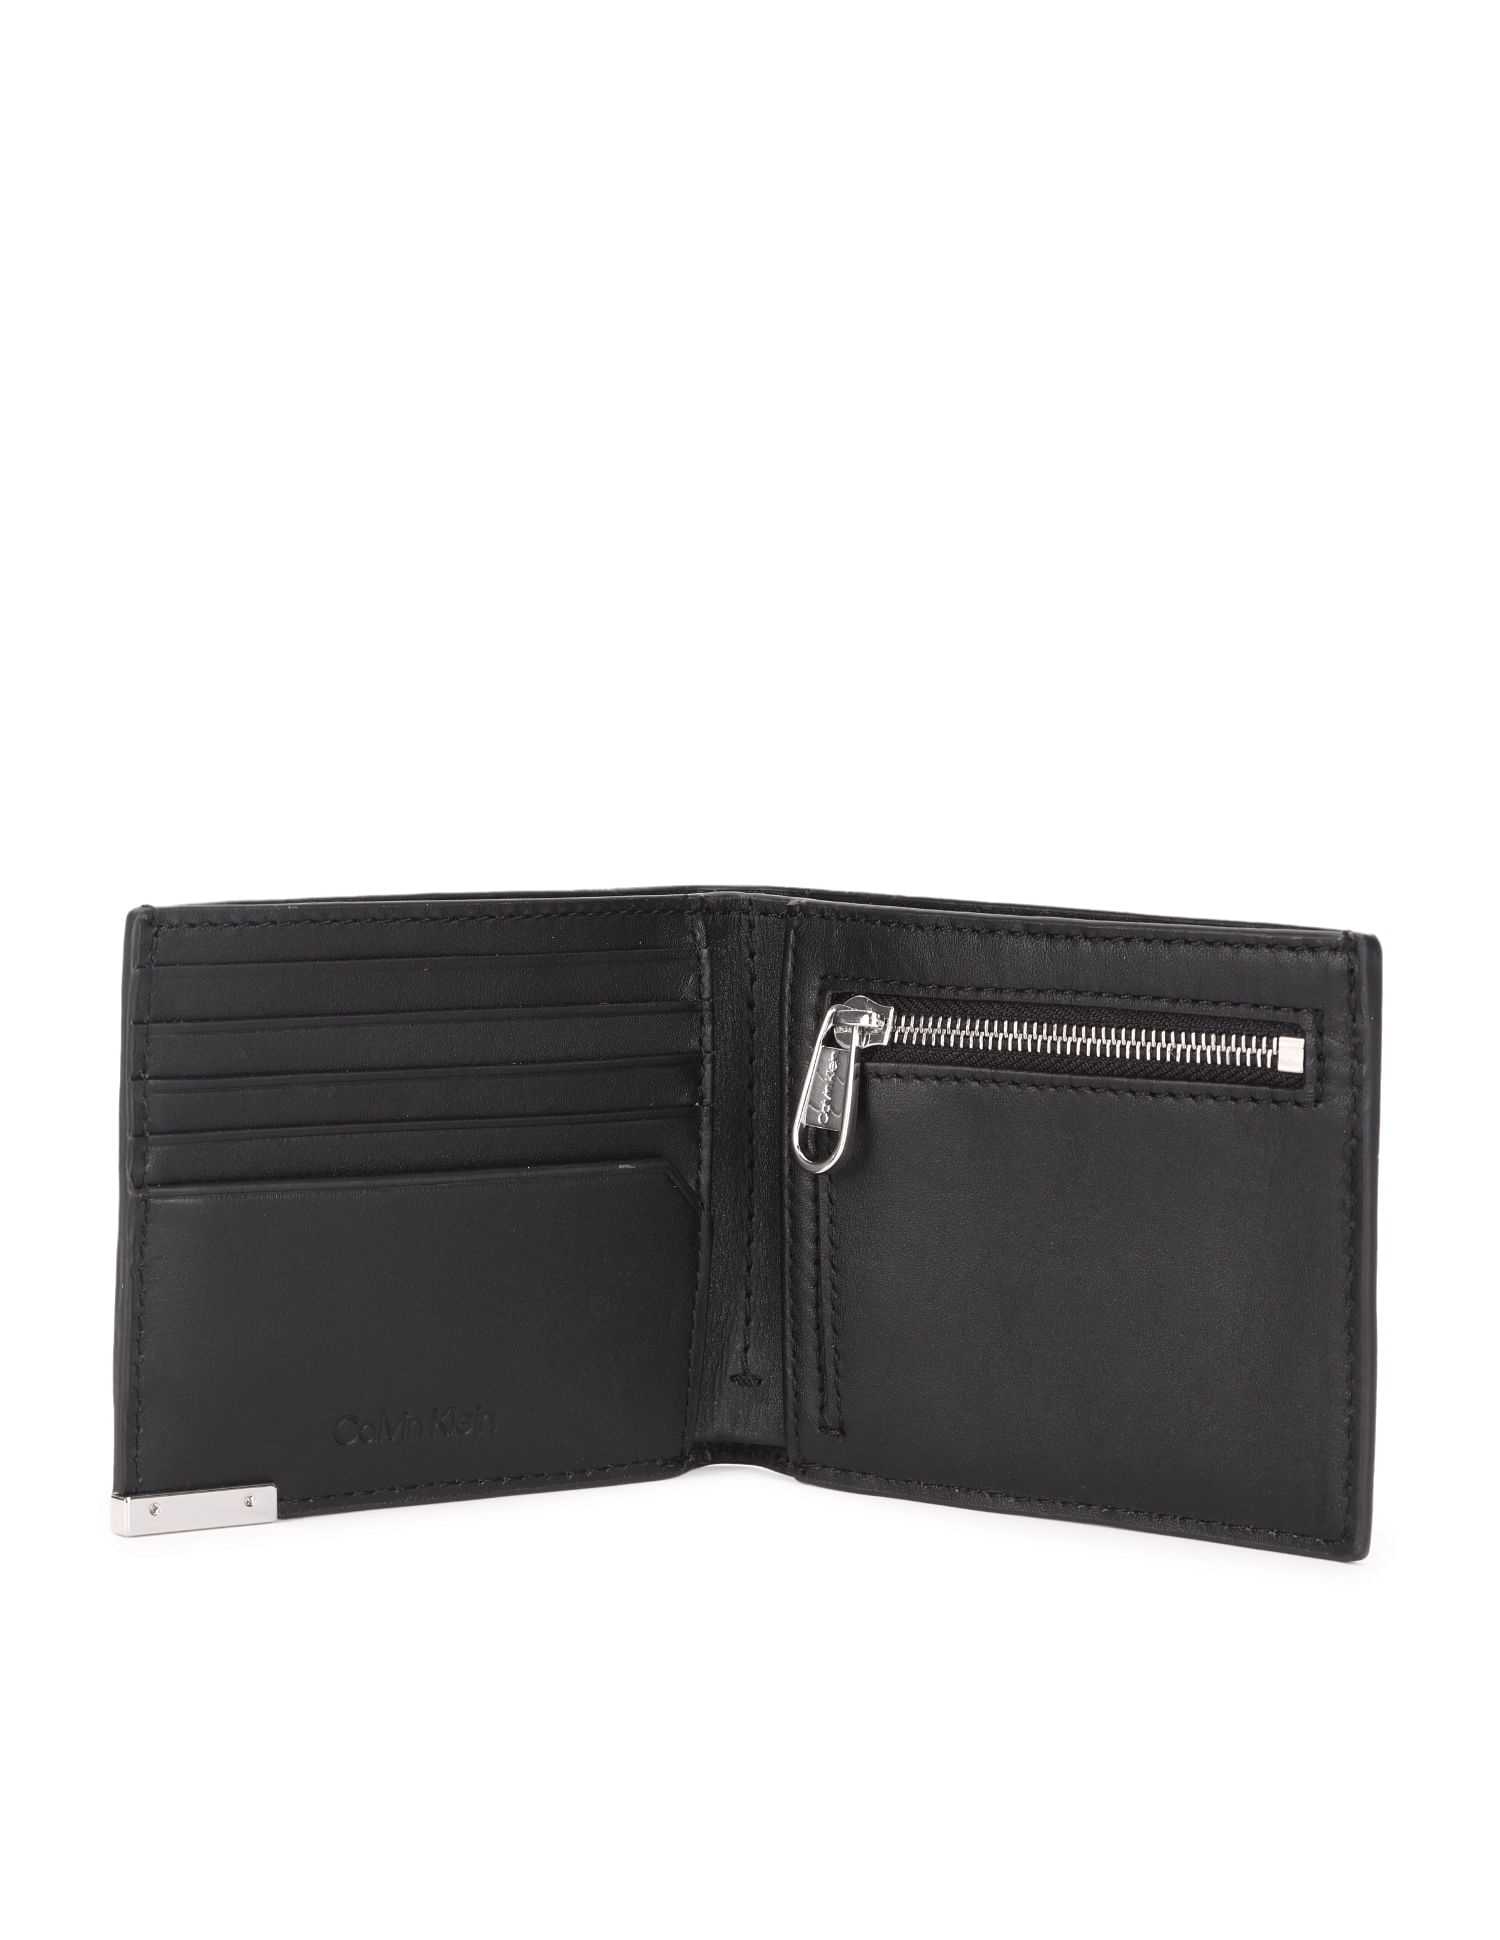 Calvin Klein Pebble Leather Slim Bifold Wallet in Green for Men